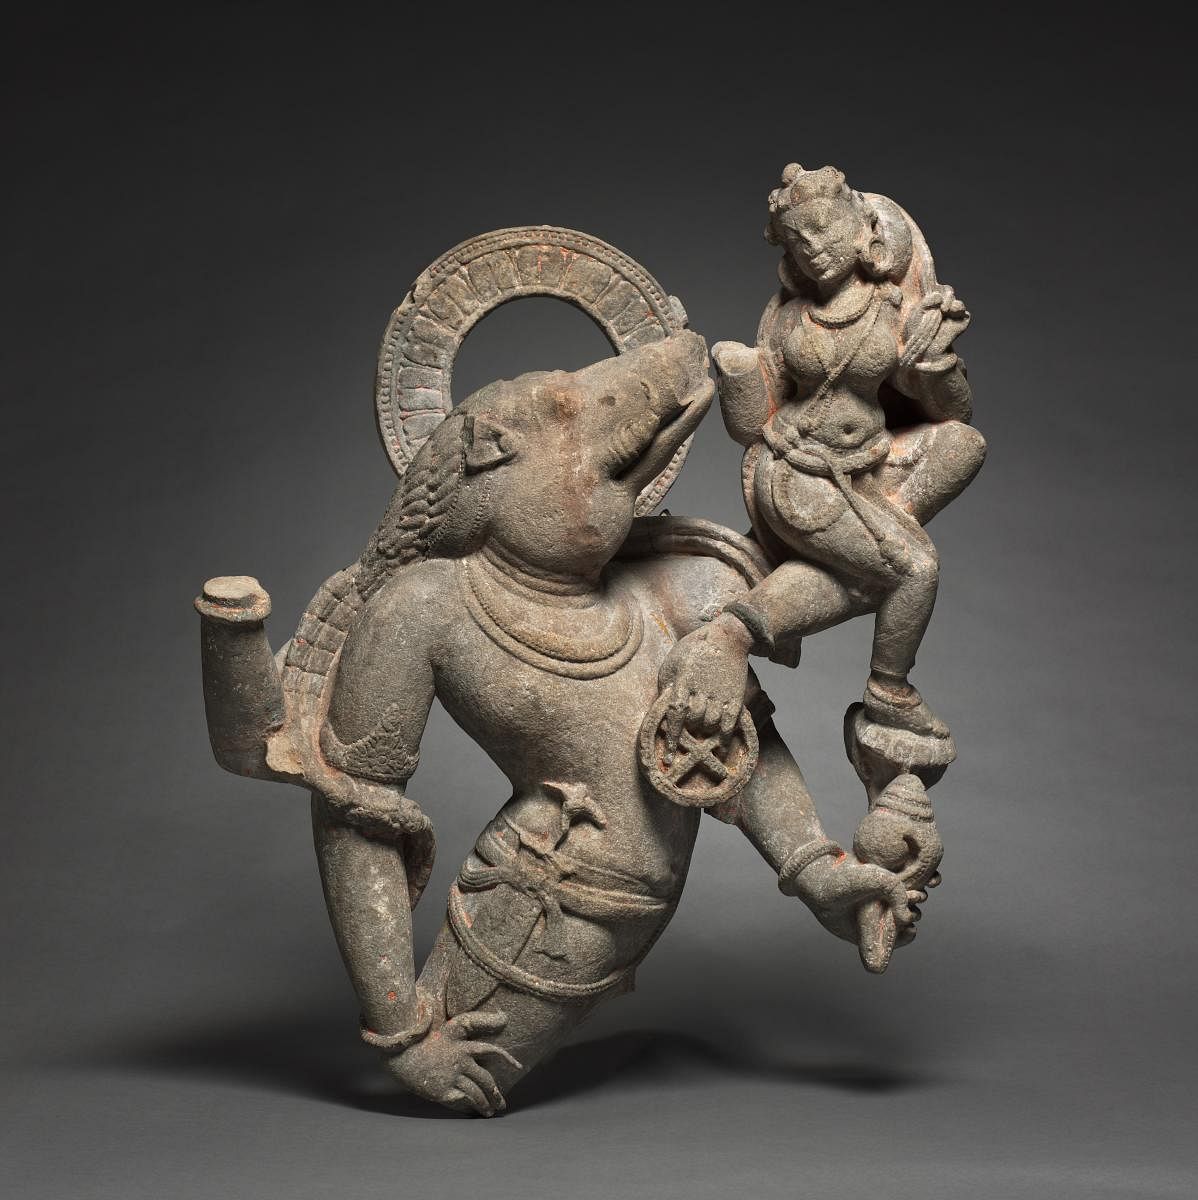 Varaha, (Boar) Incarnation of Vishnu, Central India, c 8th-9th century, Sandstone. (Pic courtesy: The Cleveland Museum Of Art)